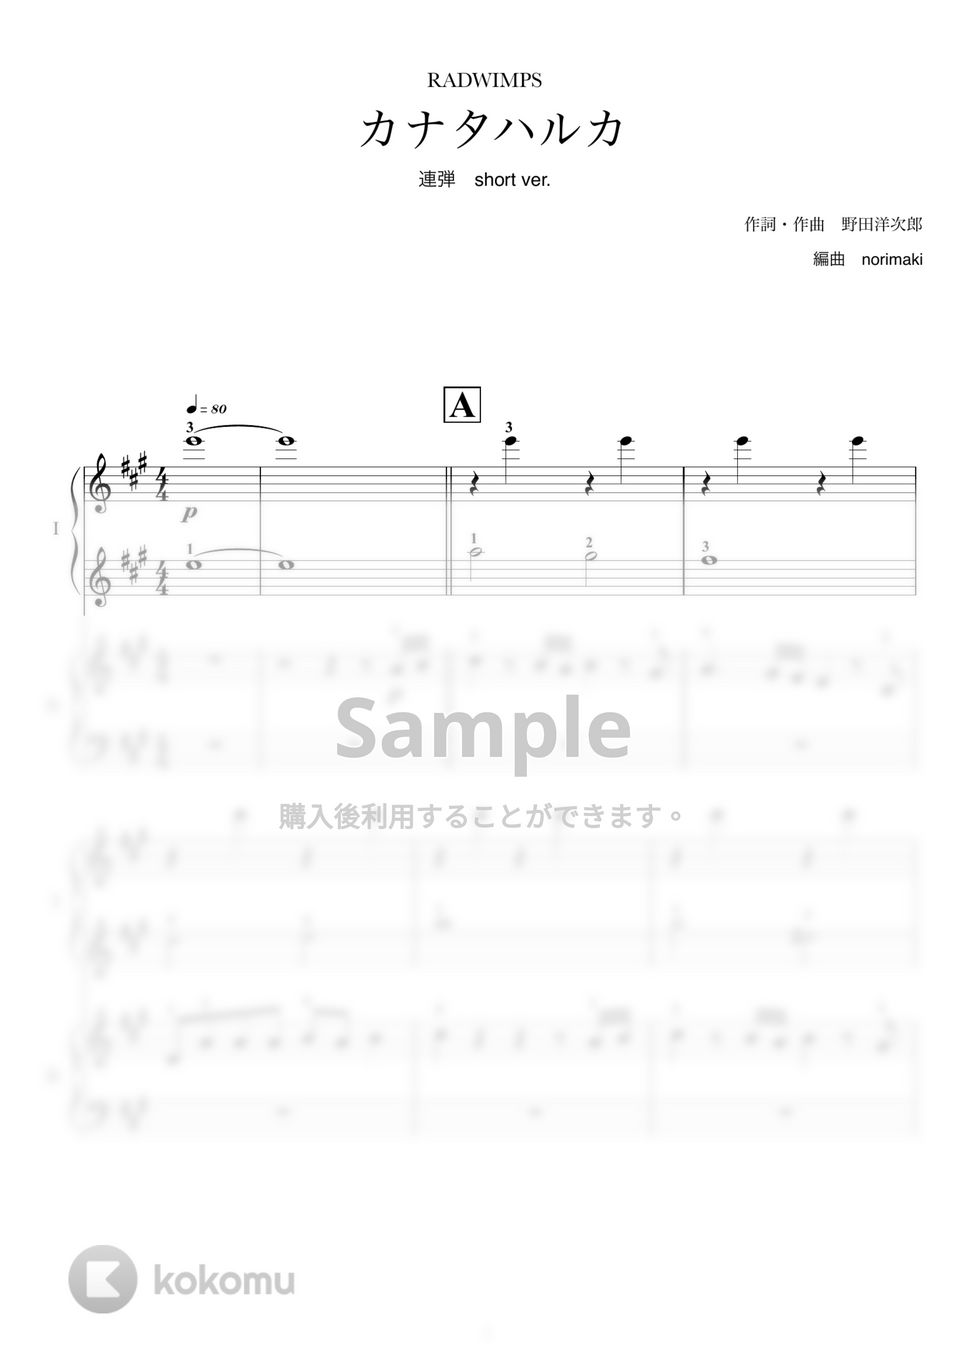 RADWIMPS - カナタハルカ（short ver.） (ピアノ連弾/すずめの戸締まり) by norimaki